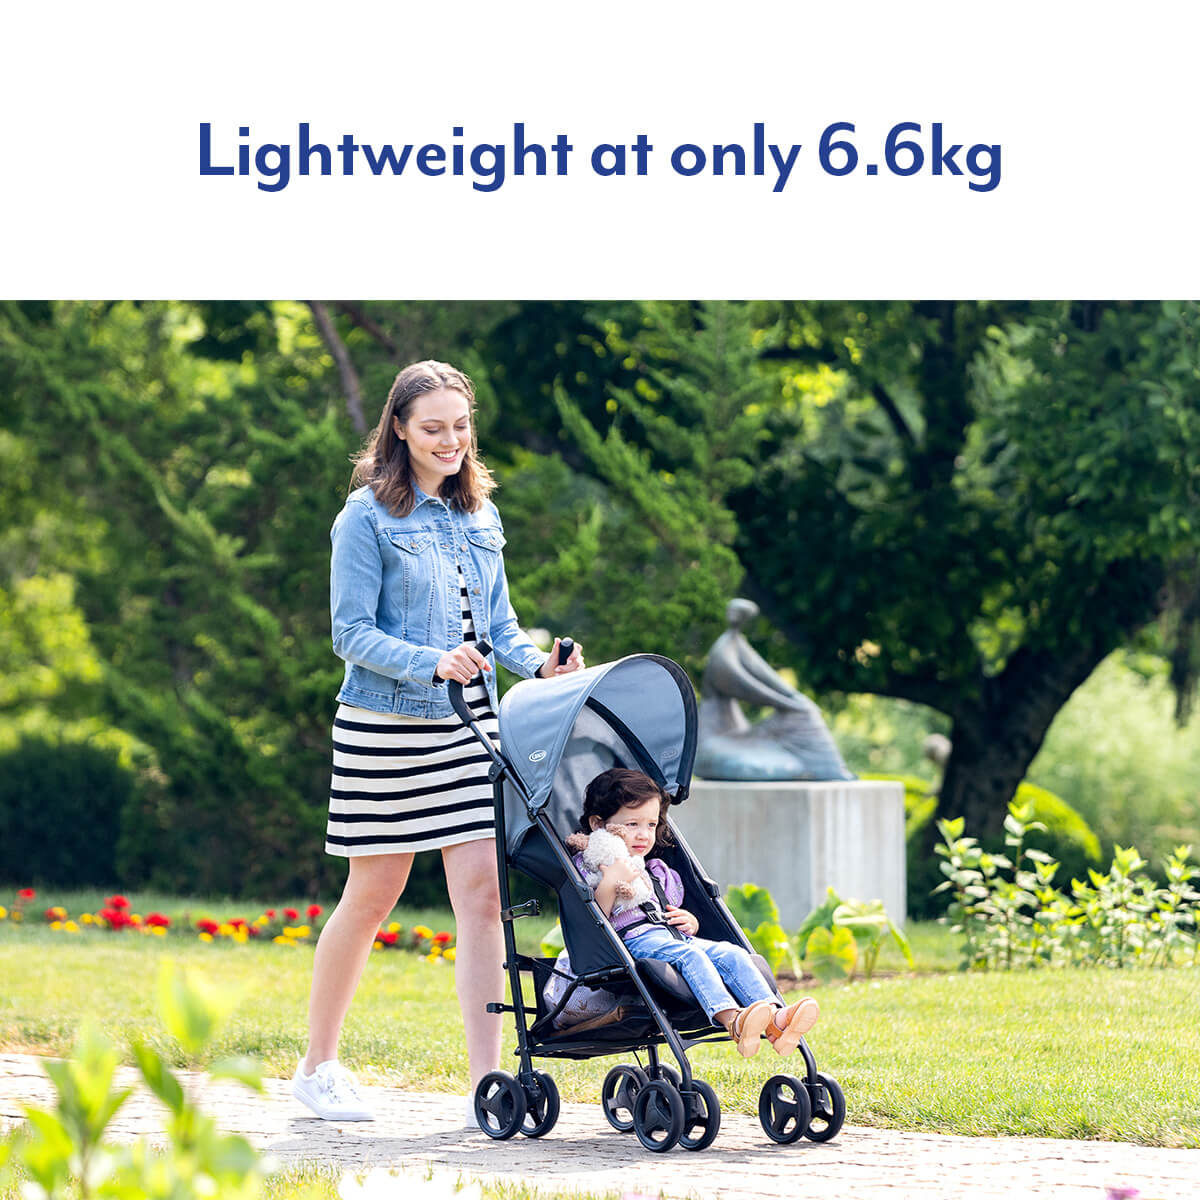 GRACO EZLITE Lightweight Travel Stroller - Midnight -  | For Your Little One